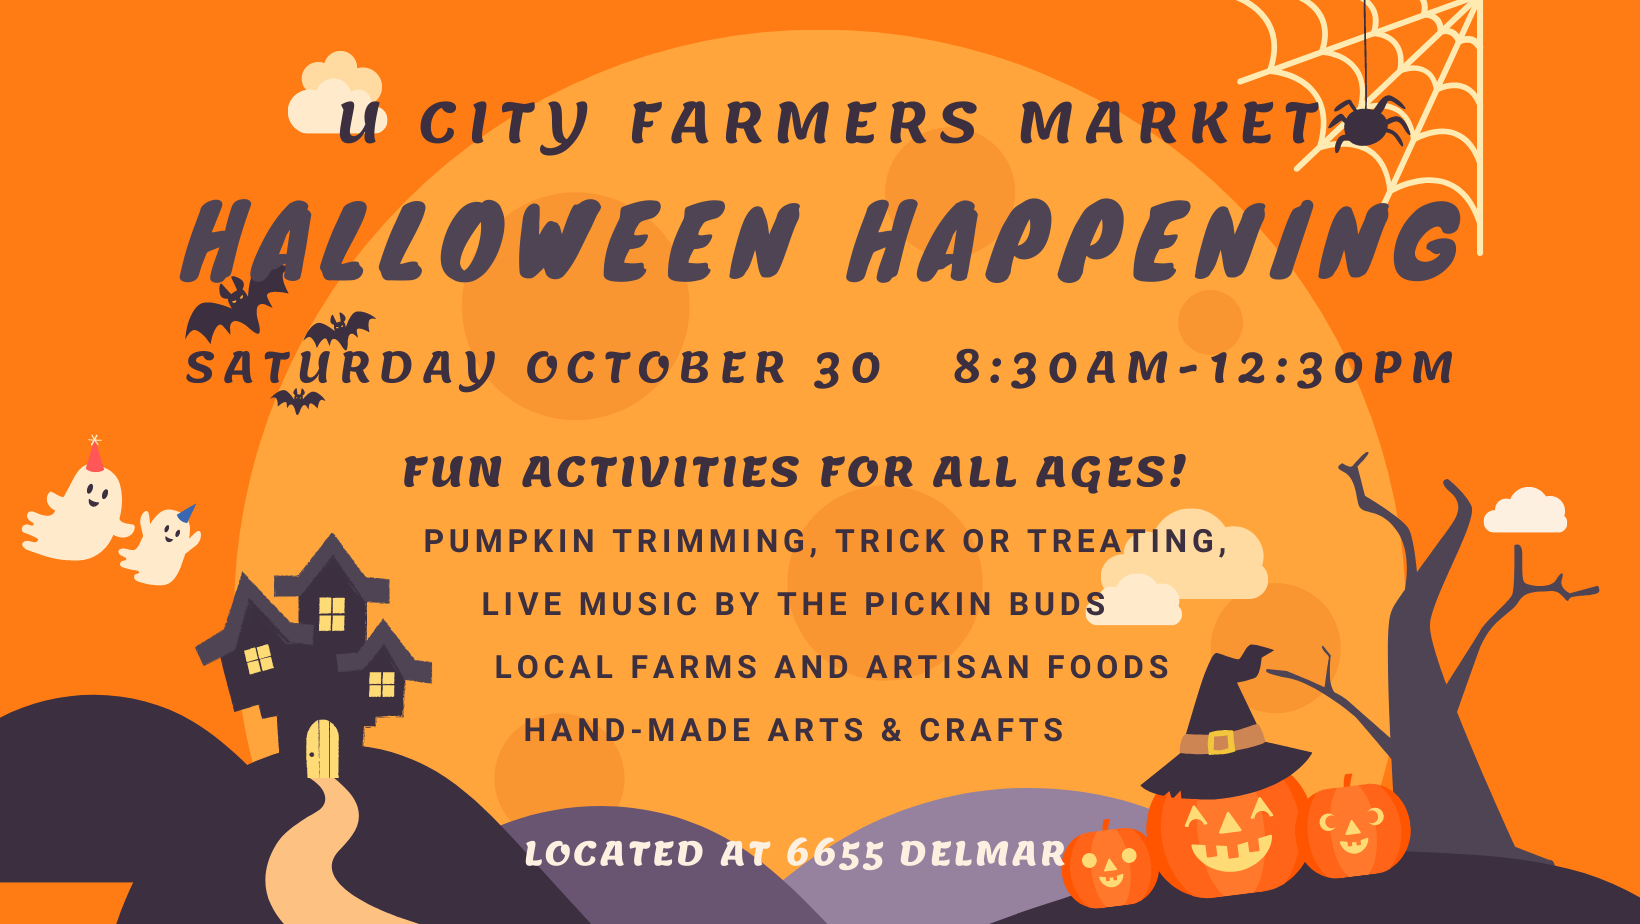 U City Farmers Market Halloween